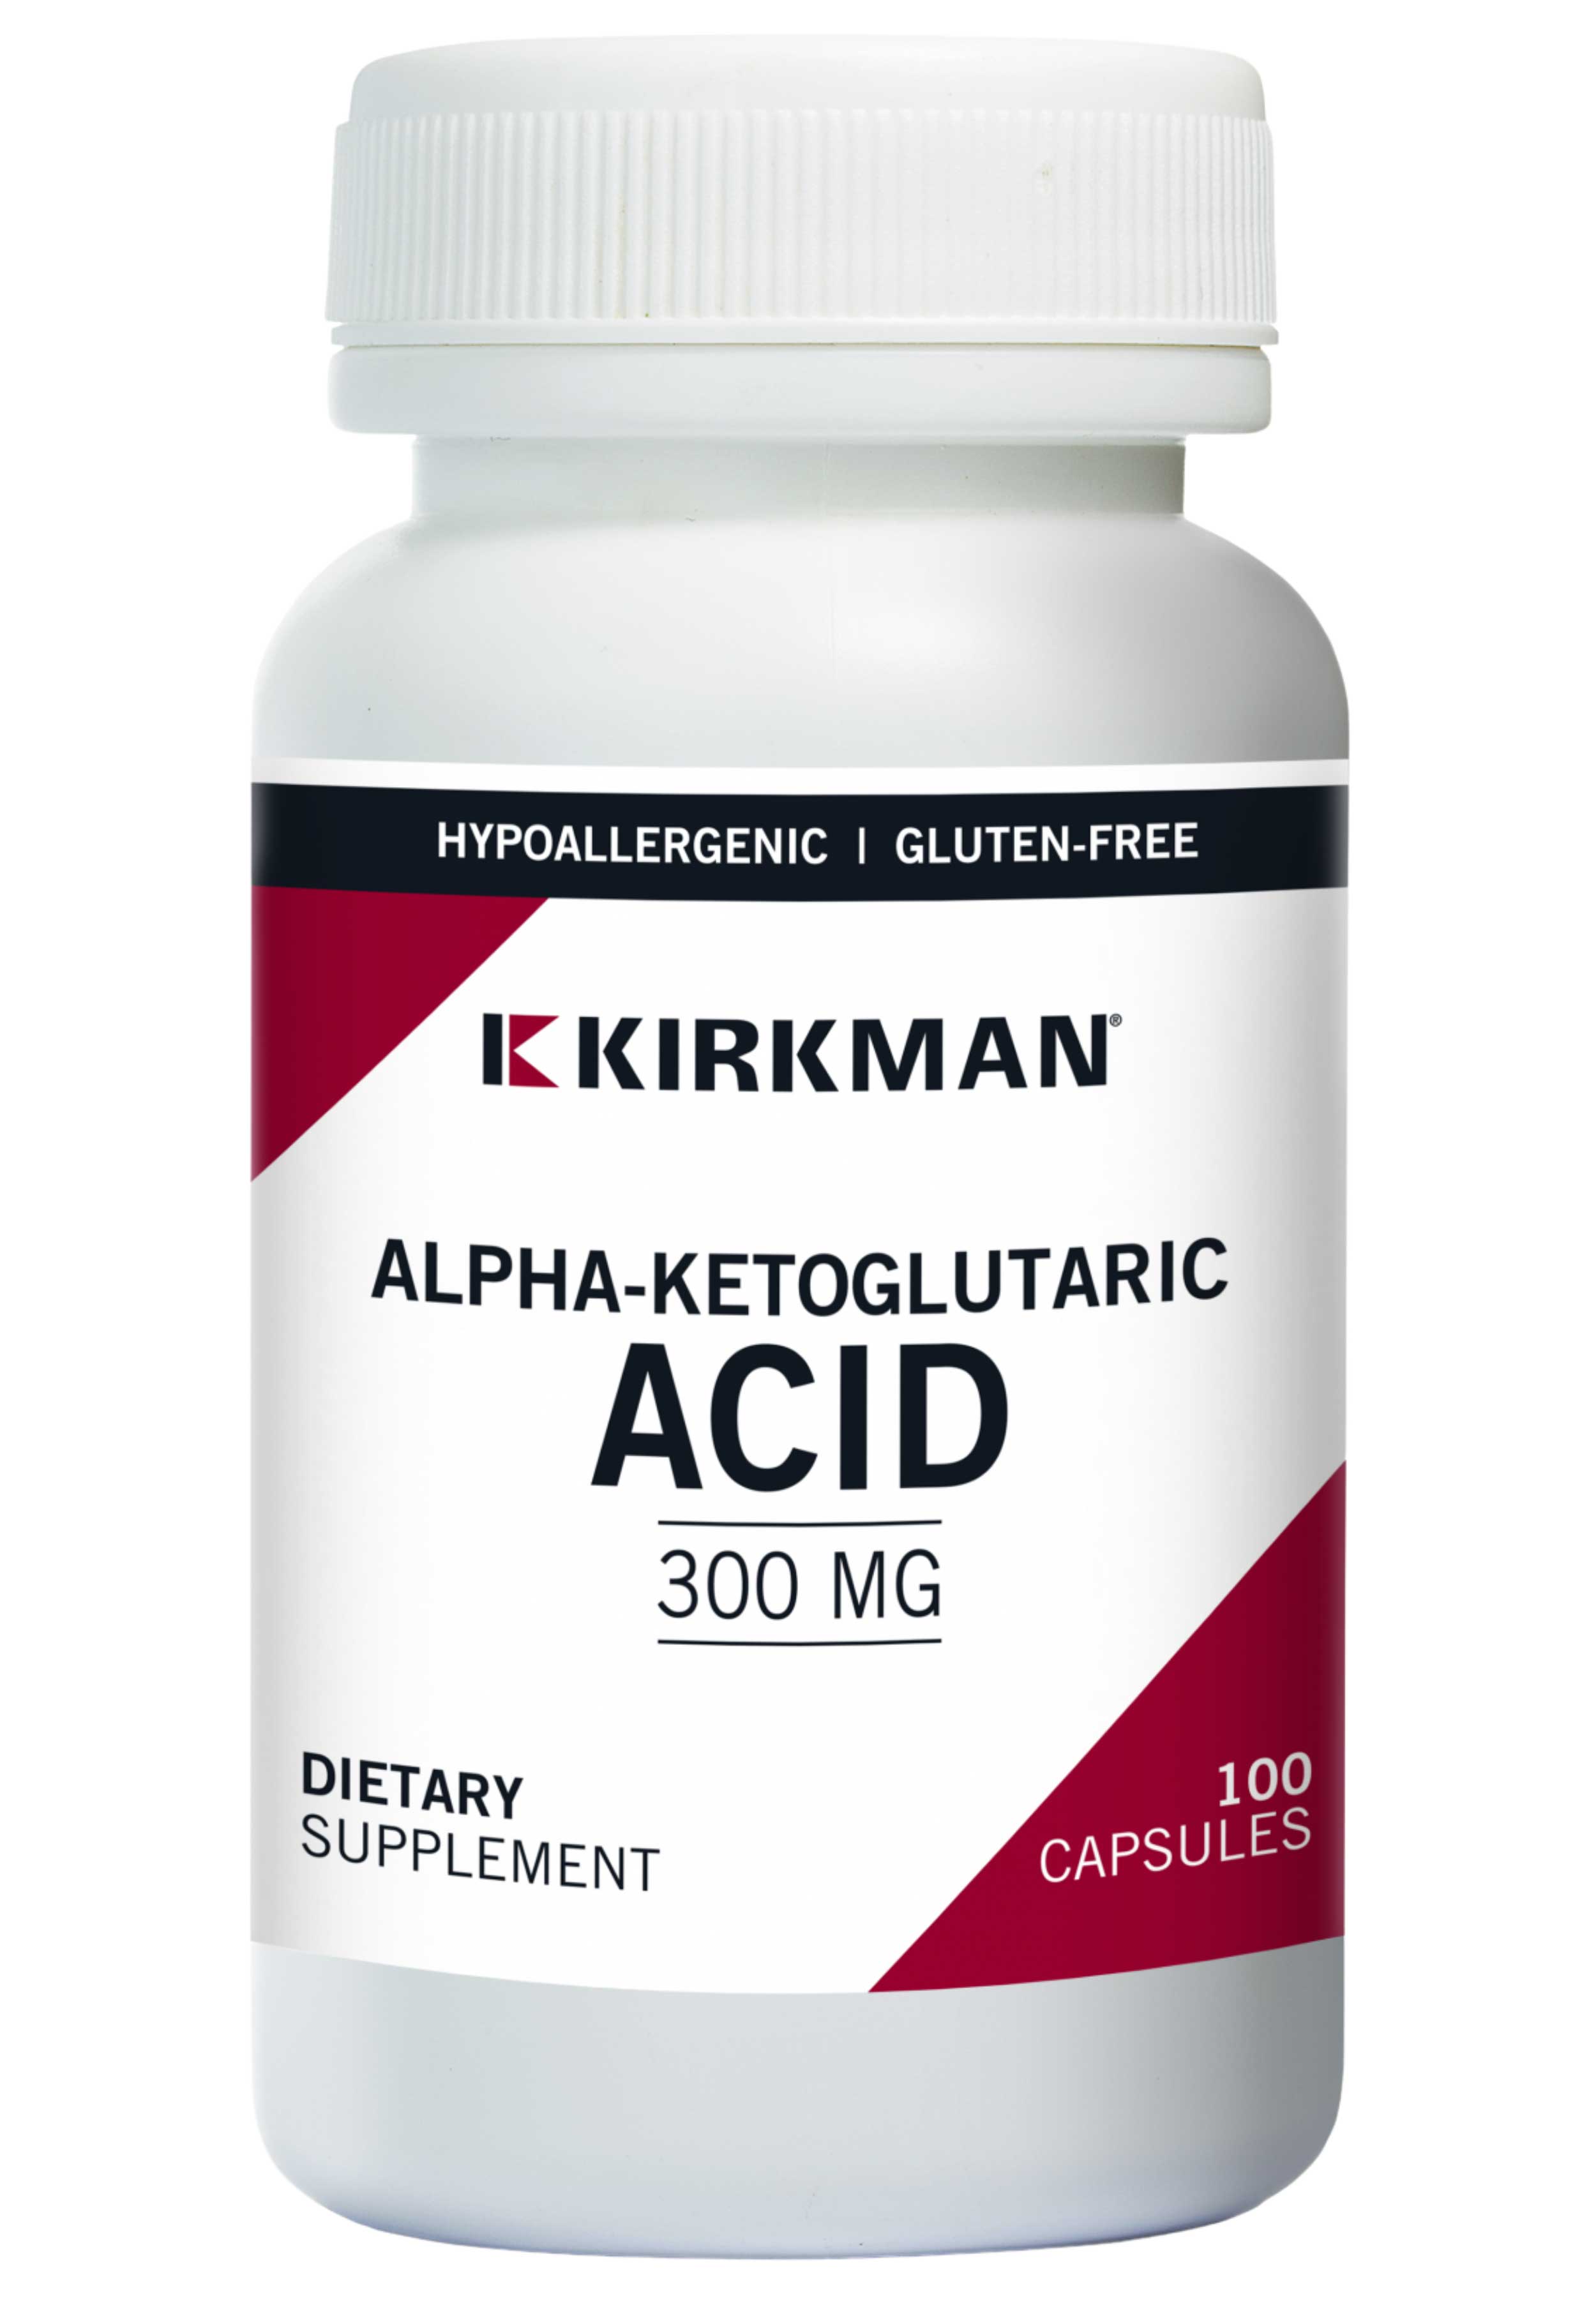 Kirkman Alpha-Ketoglutaric Acid